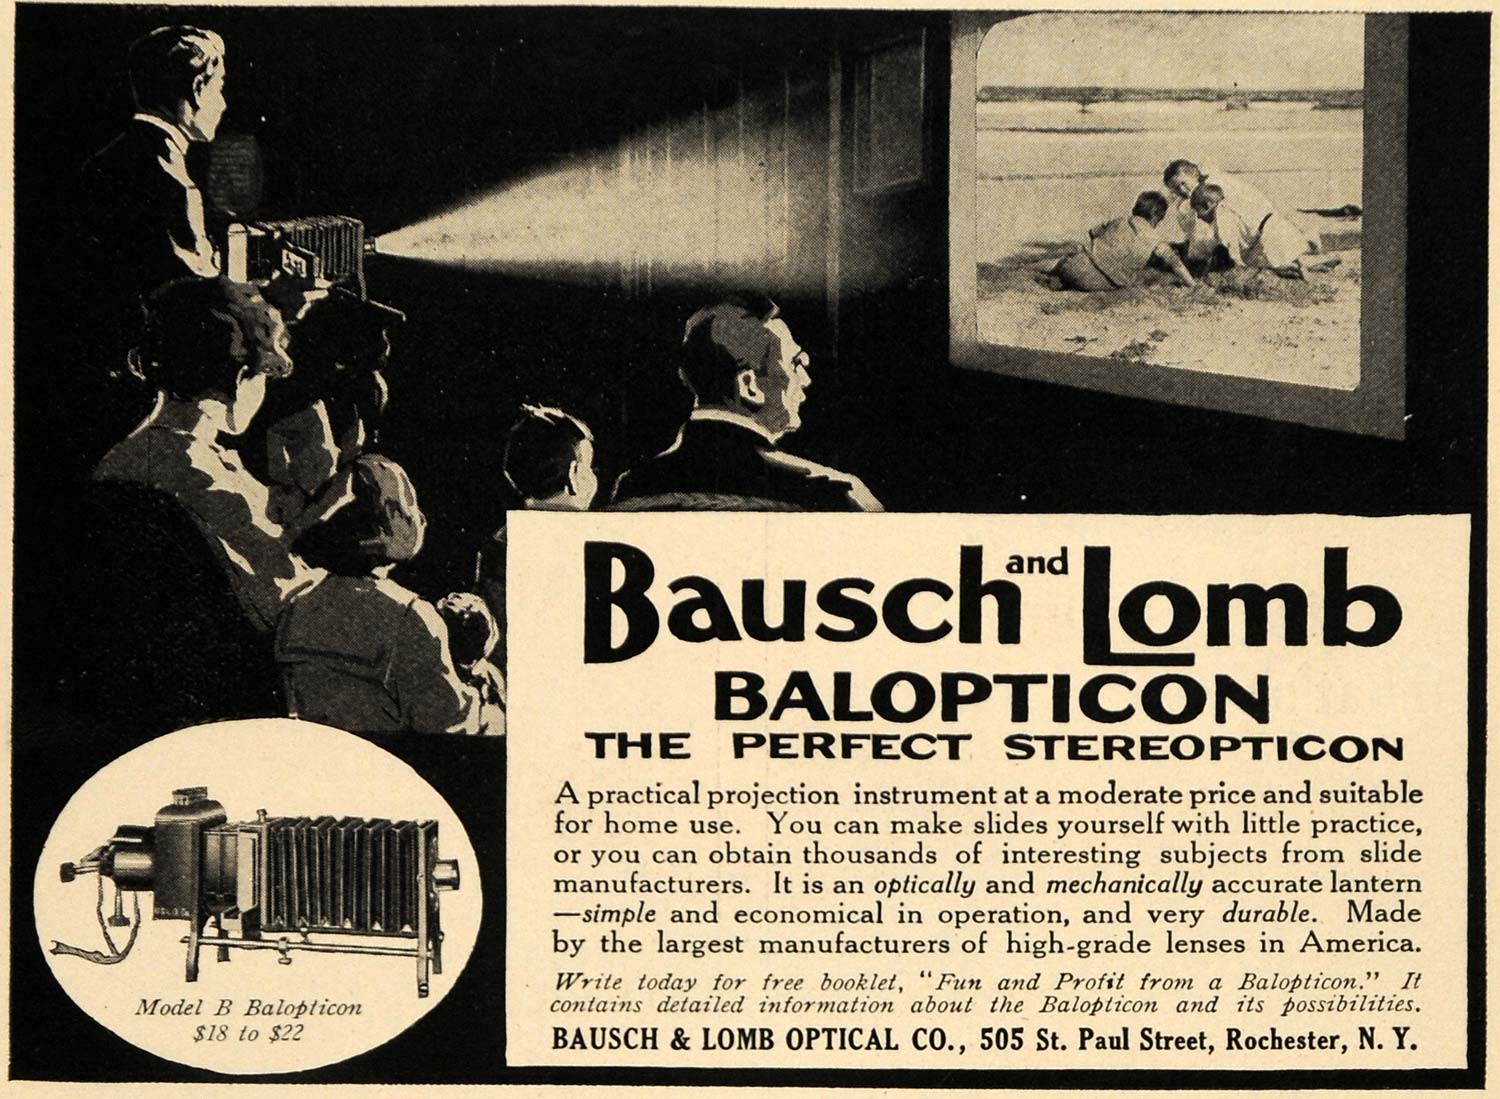 1913 Ad Bausch & Lomb Optical Co. Balopticon Camera - ORIGINAL ADVERTISING TIN5